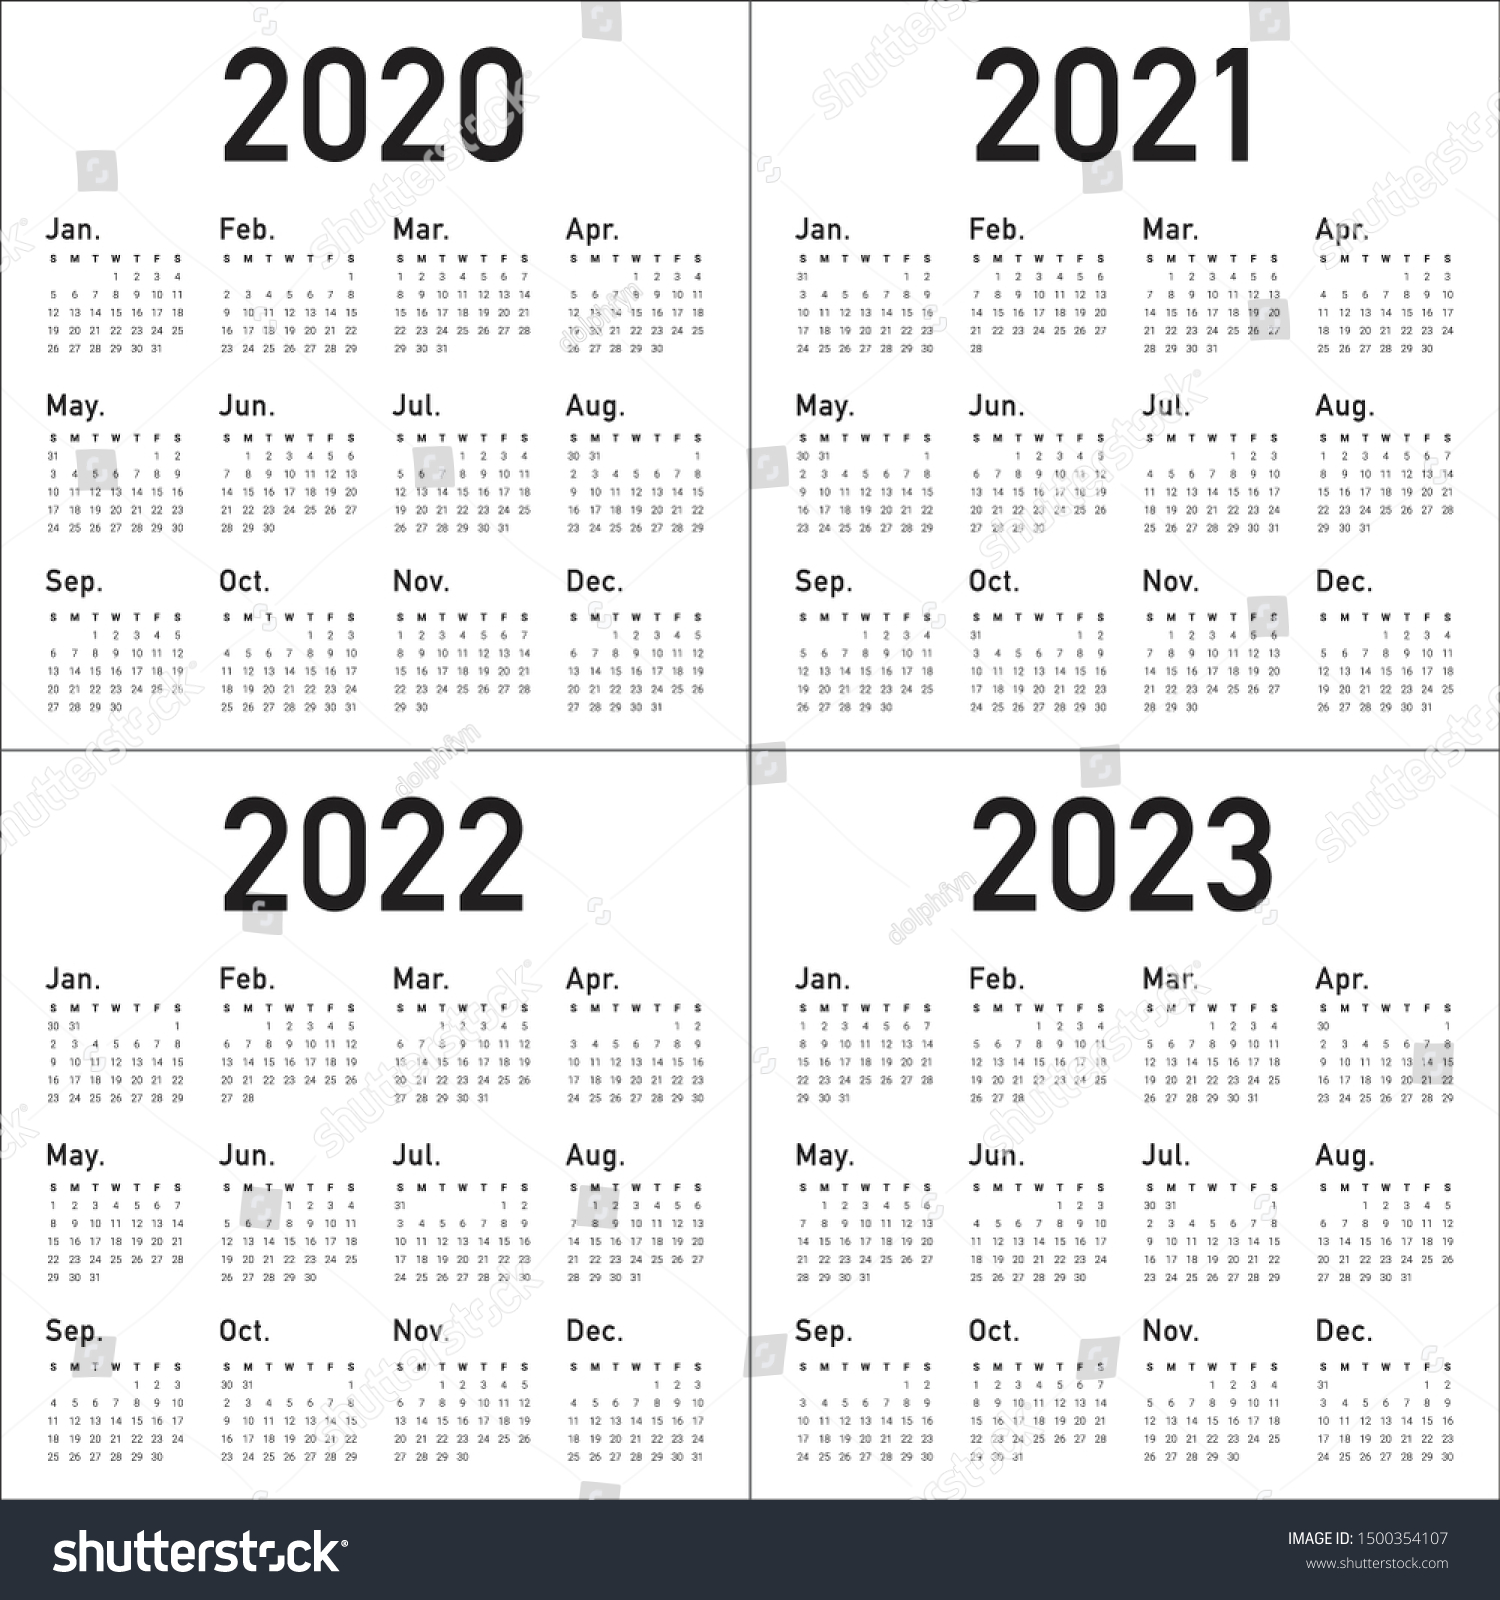 Tcnj Calendar 2022 2023 Year 2020 2021 2022 2023 Calendar Stock Vector (Royalty Free) 1500354107